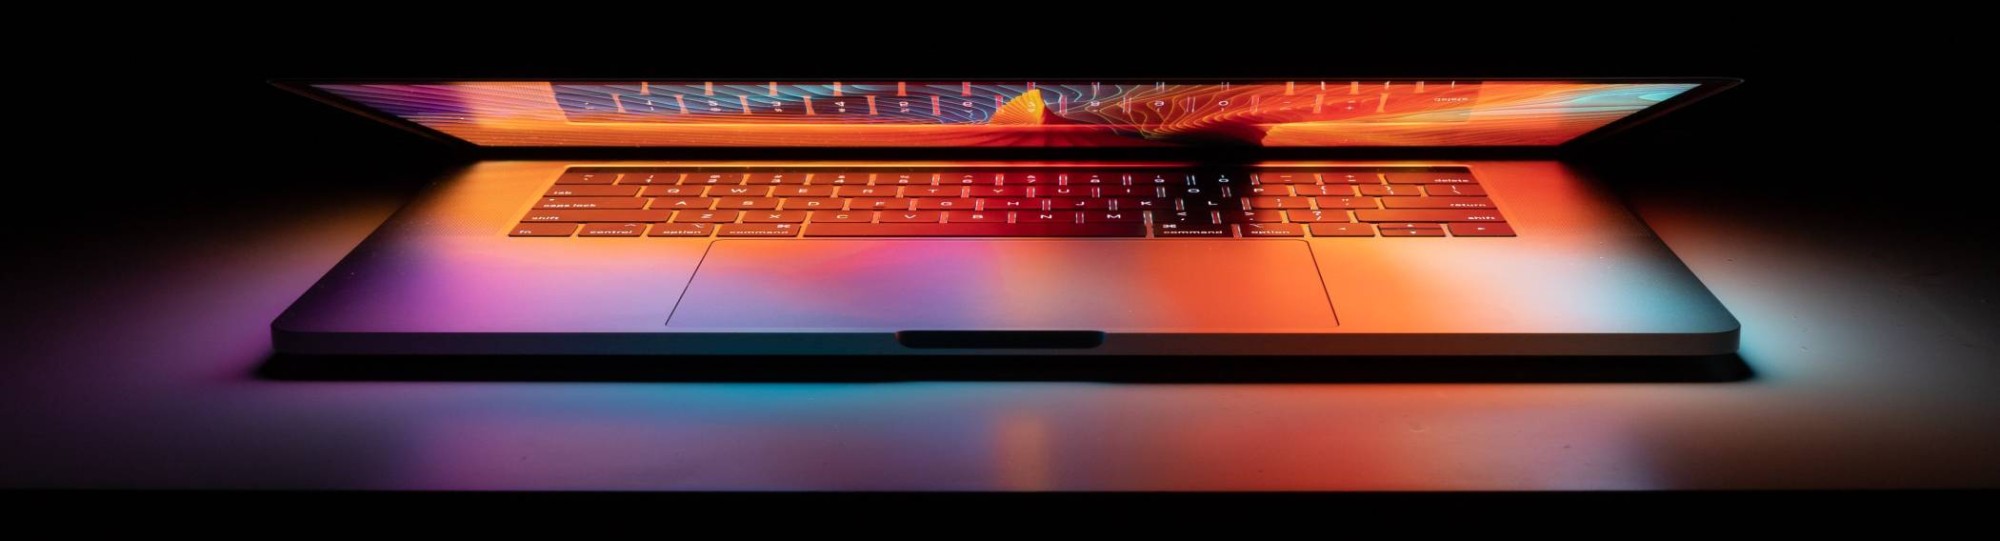 laptop kleur